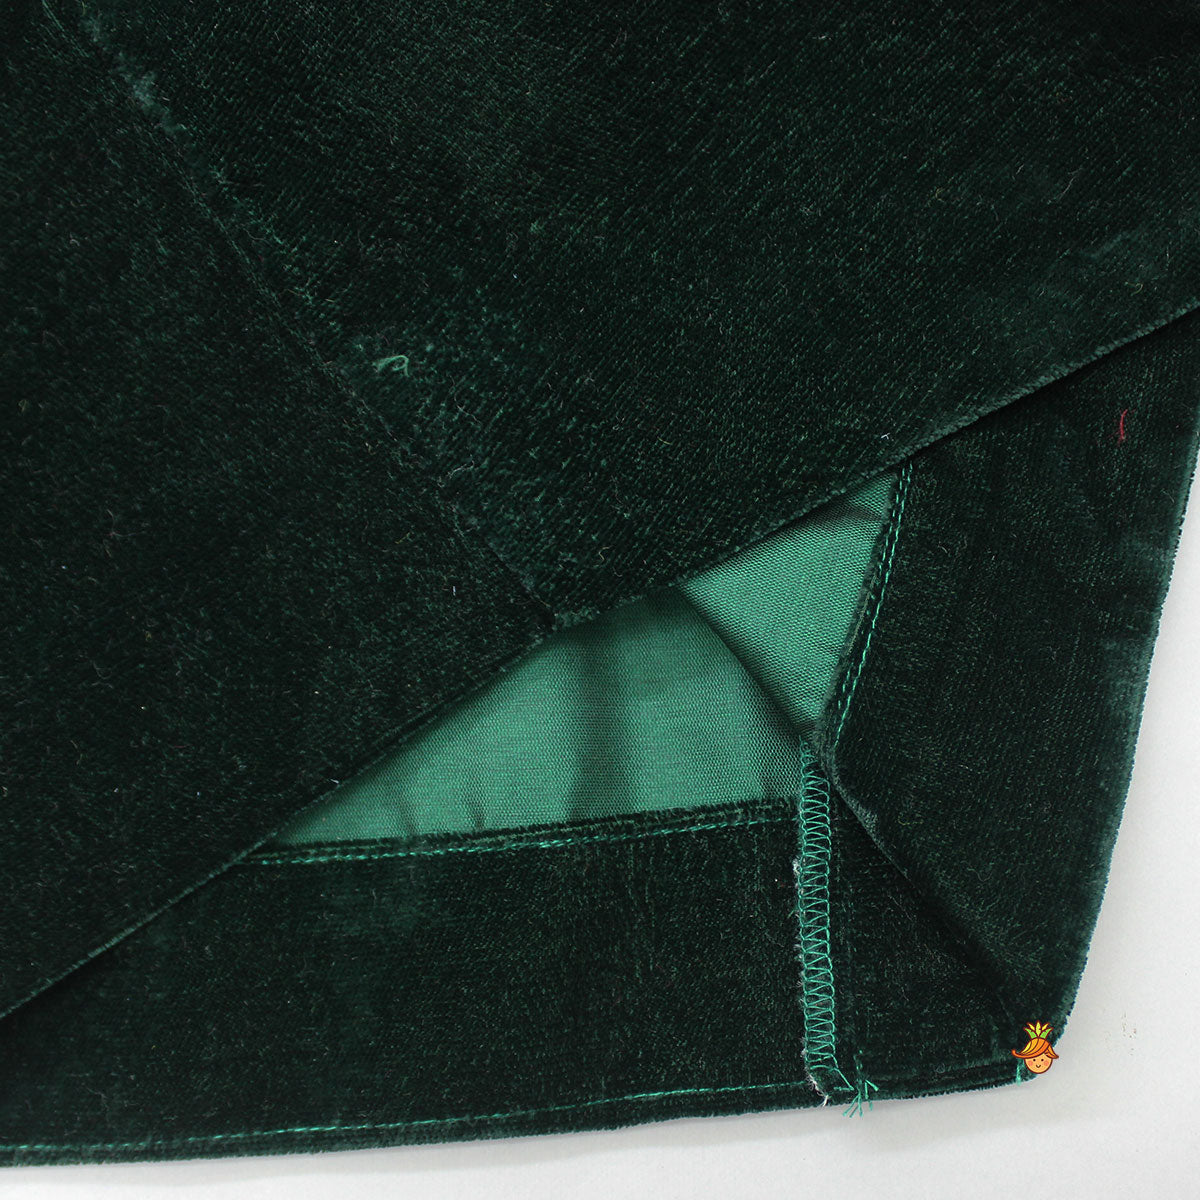 Green Velvet Jacket With Floral Printed Kurta And Churidar